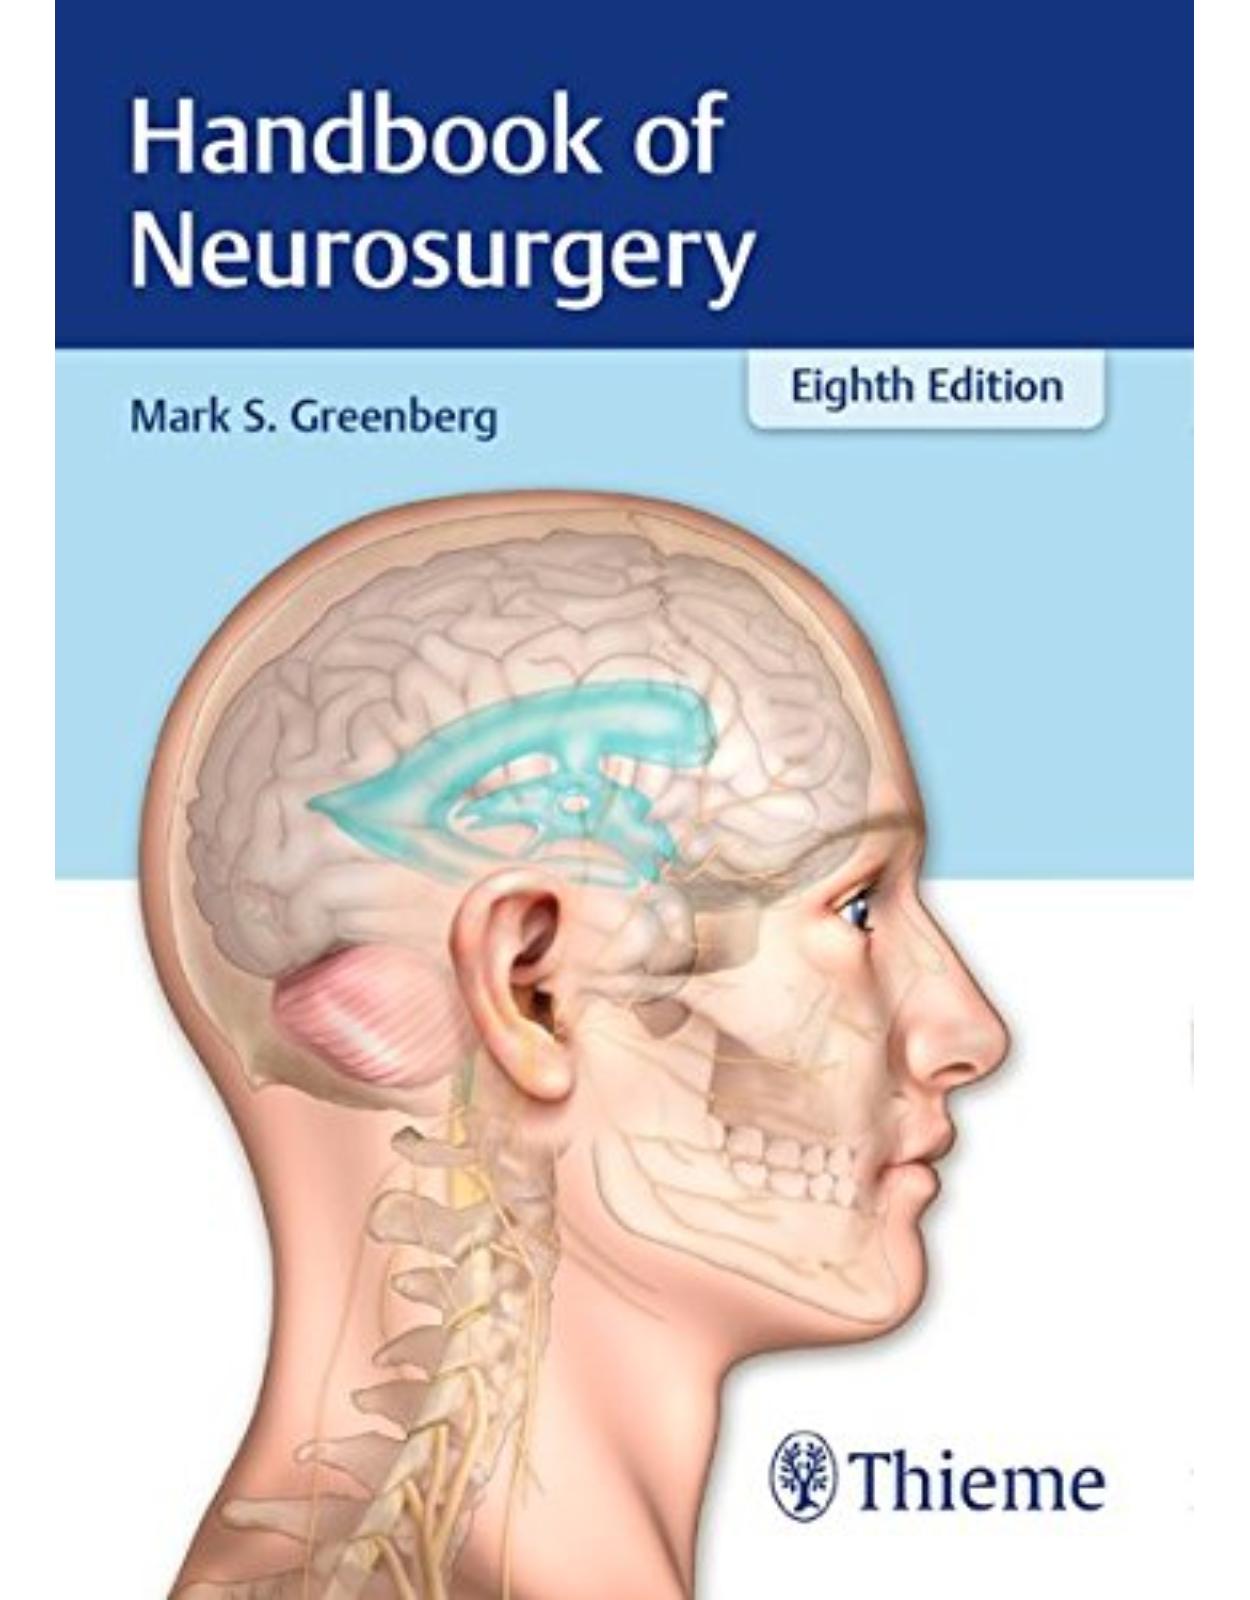 Handbook of Neurosurgery, 8th Edition